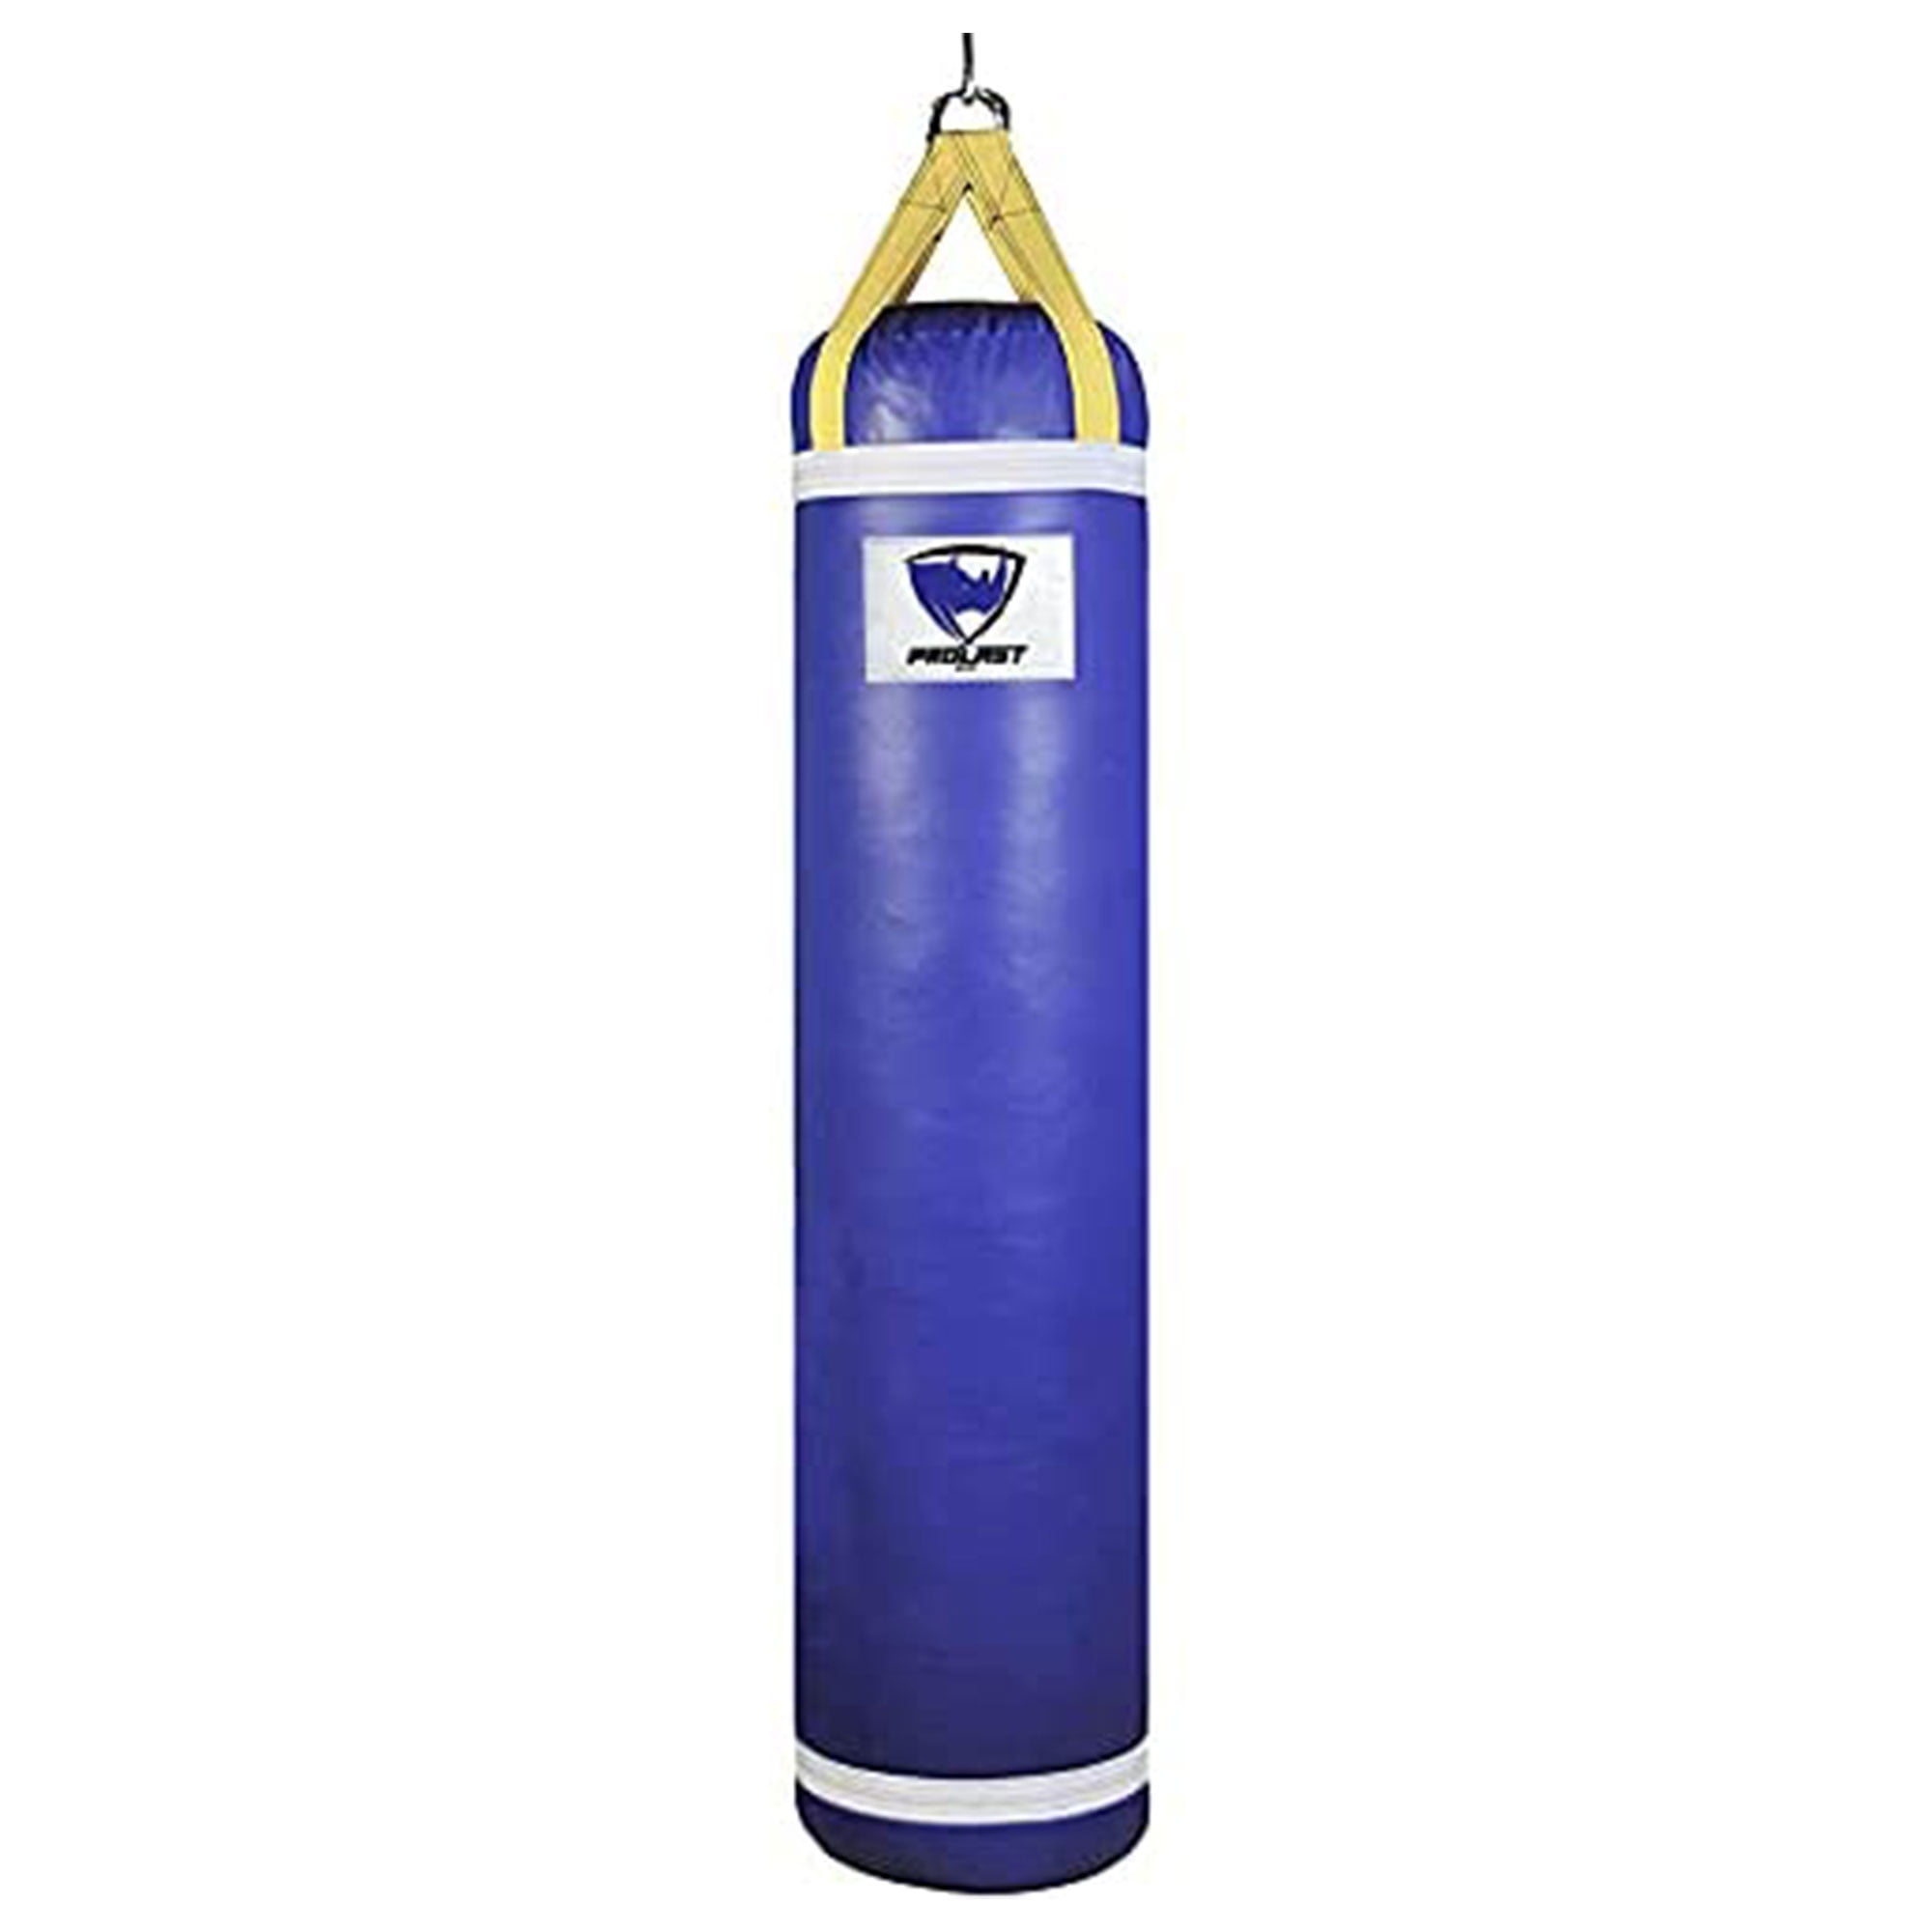 Professional 135 lbs Boxing MMA PRO-FAST Punching Bag Muay Thai Training Bag 